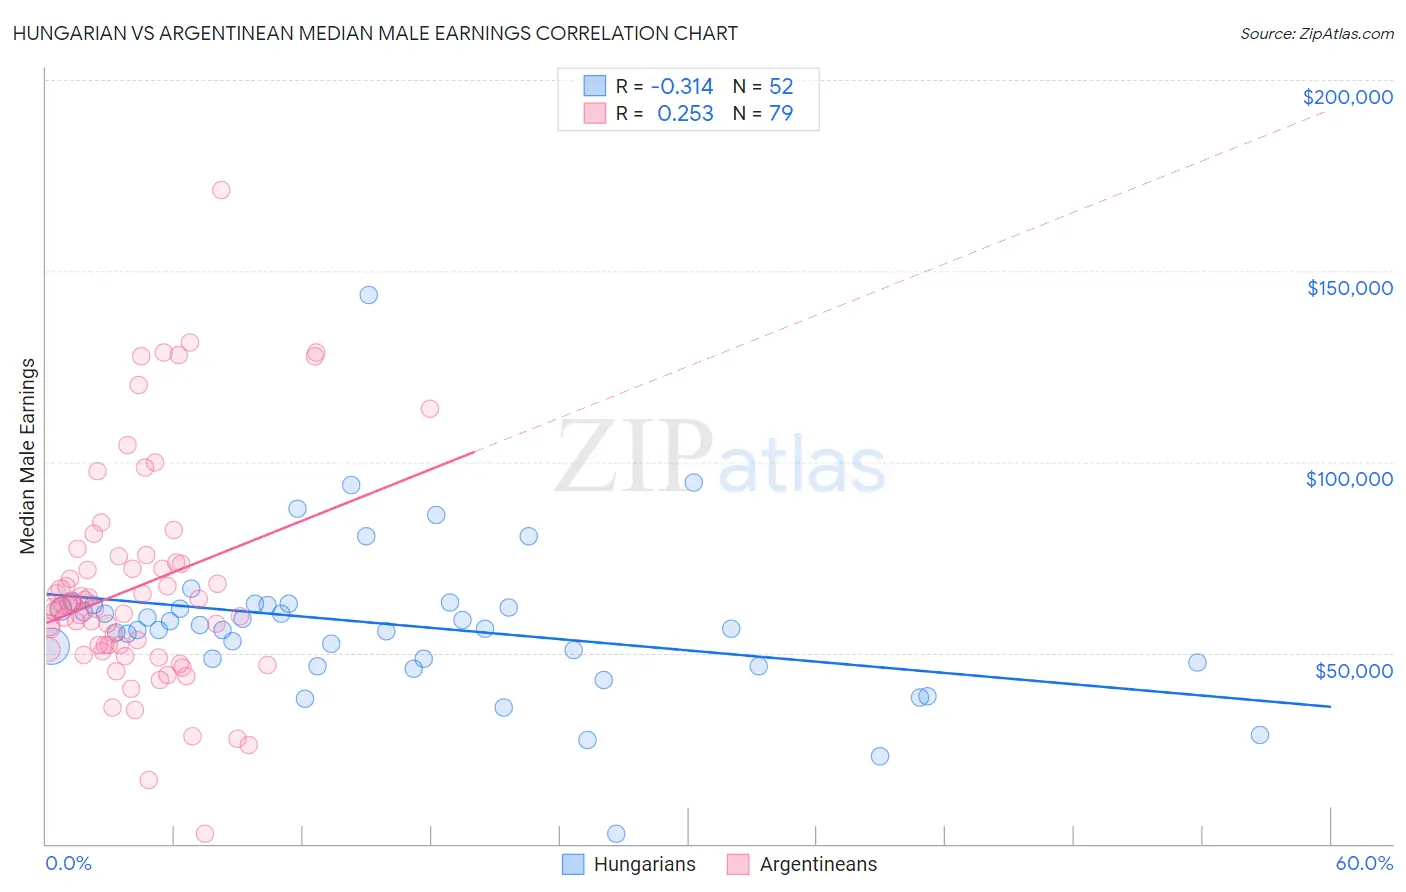 Hungarian vs Argentinean Median Male Earnings